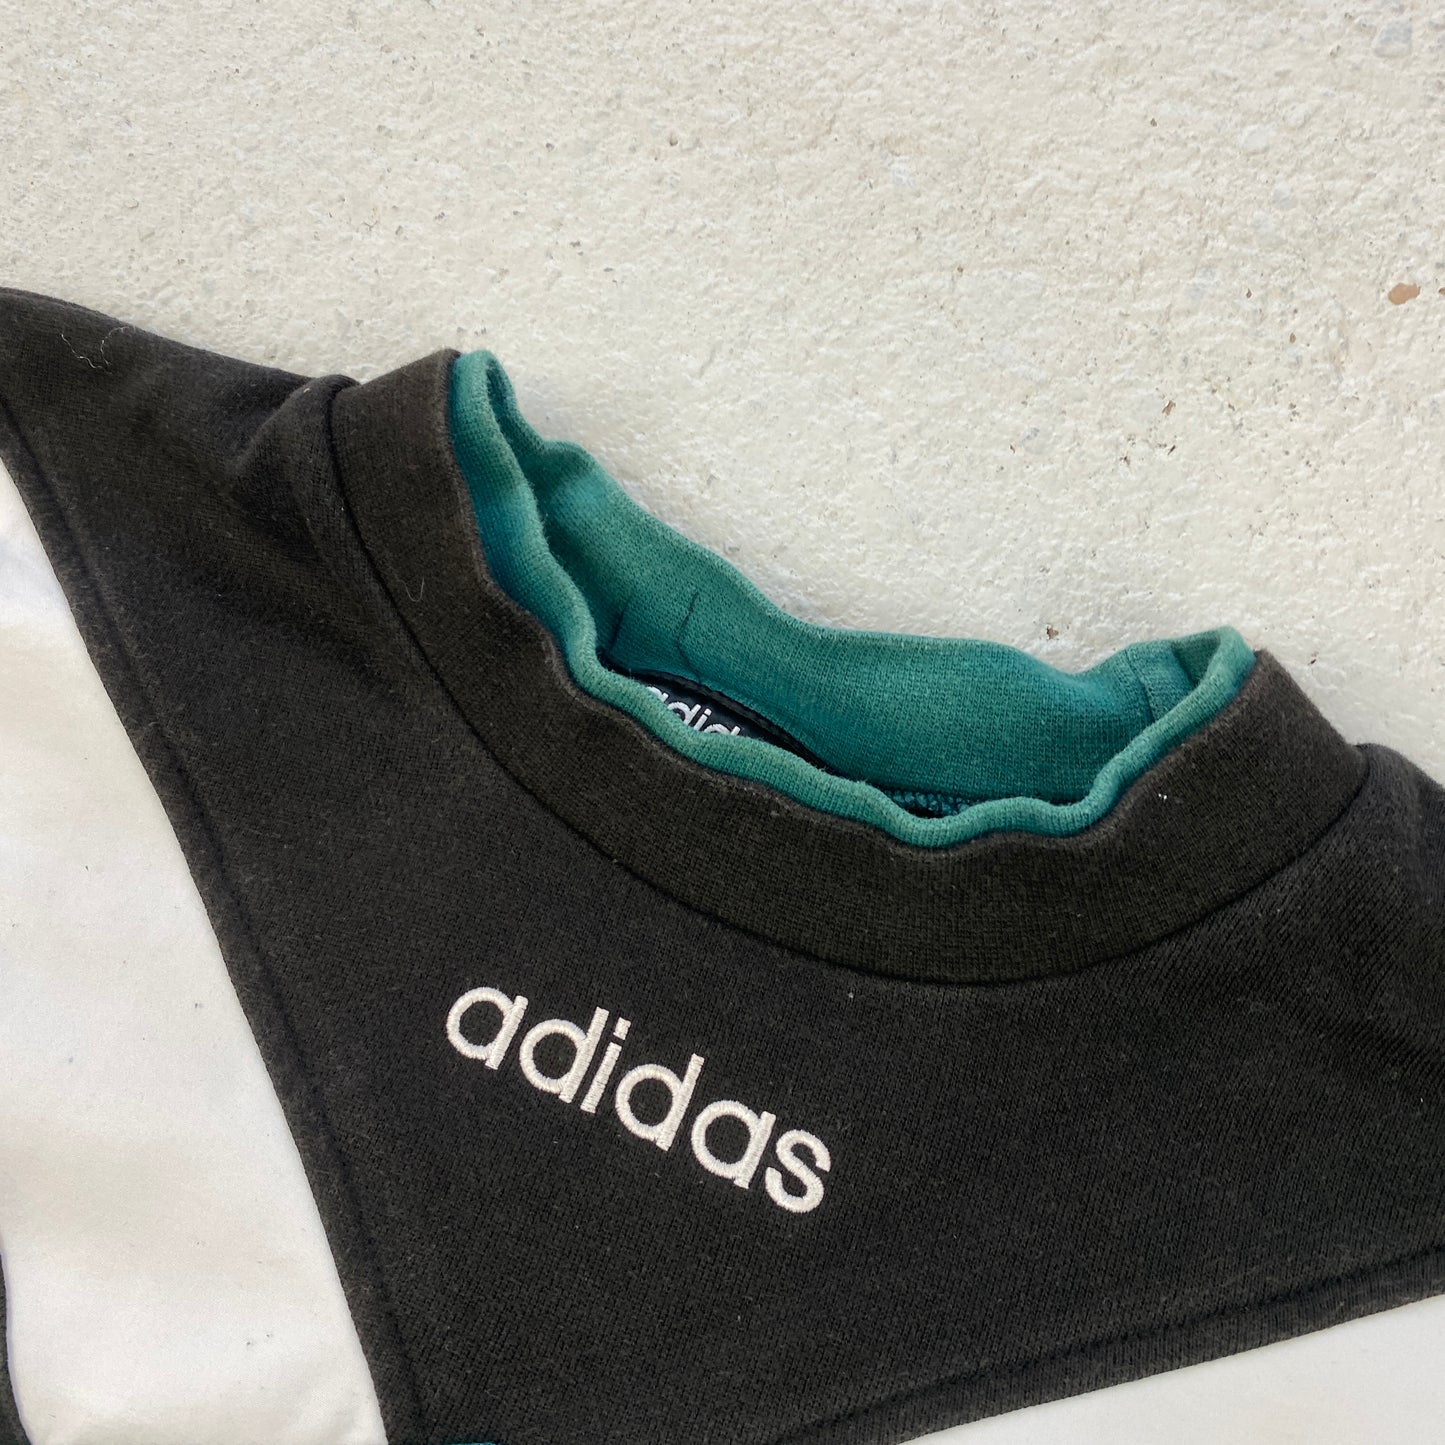 Adidas RARE heavyweight sweater (L-XL)